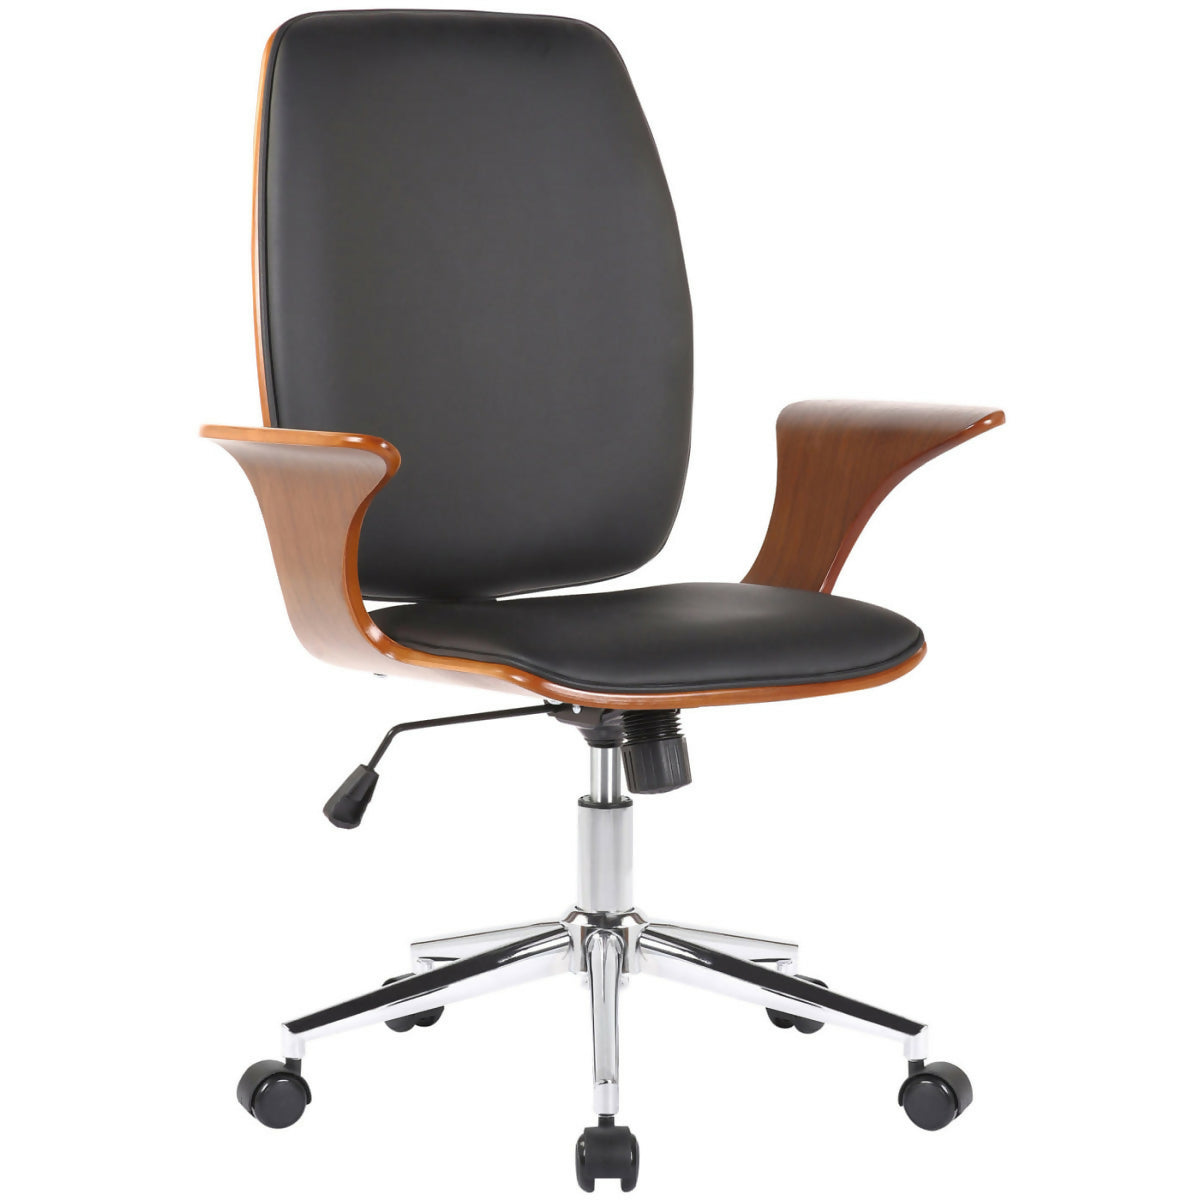 Burbank office chair - Walnut - Black